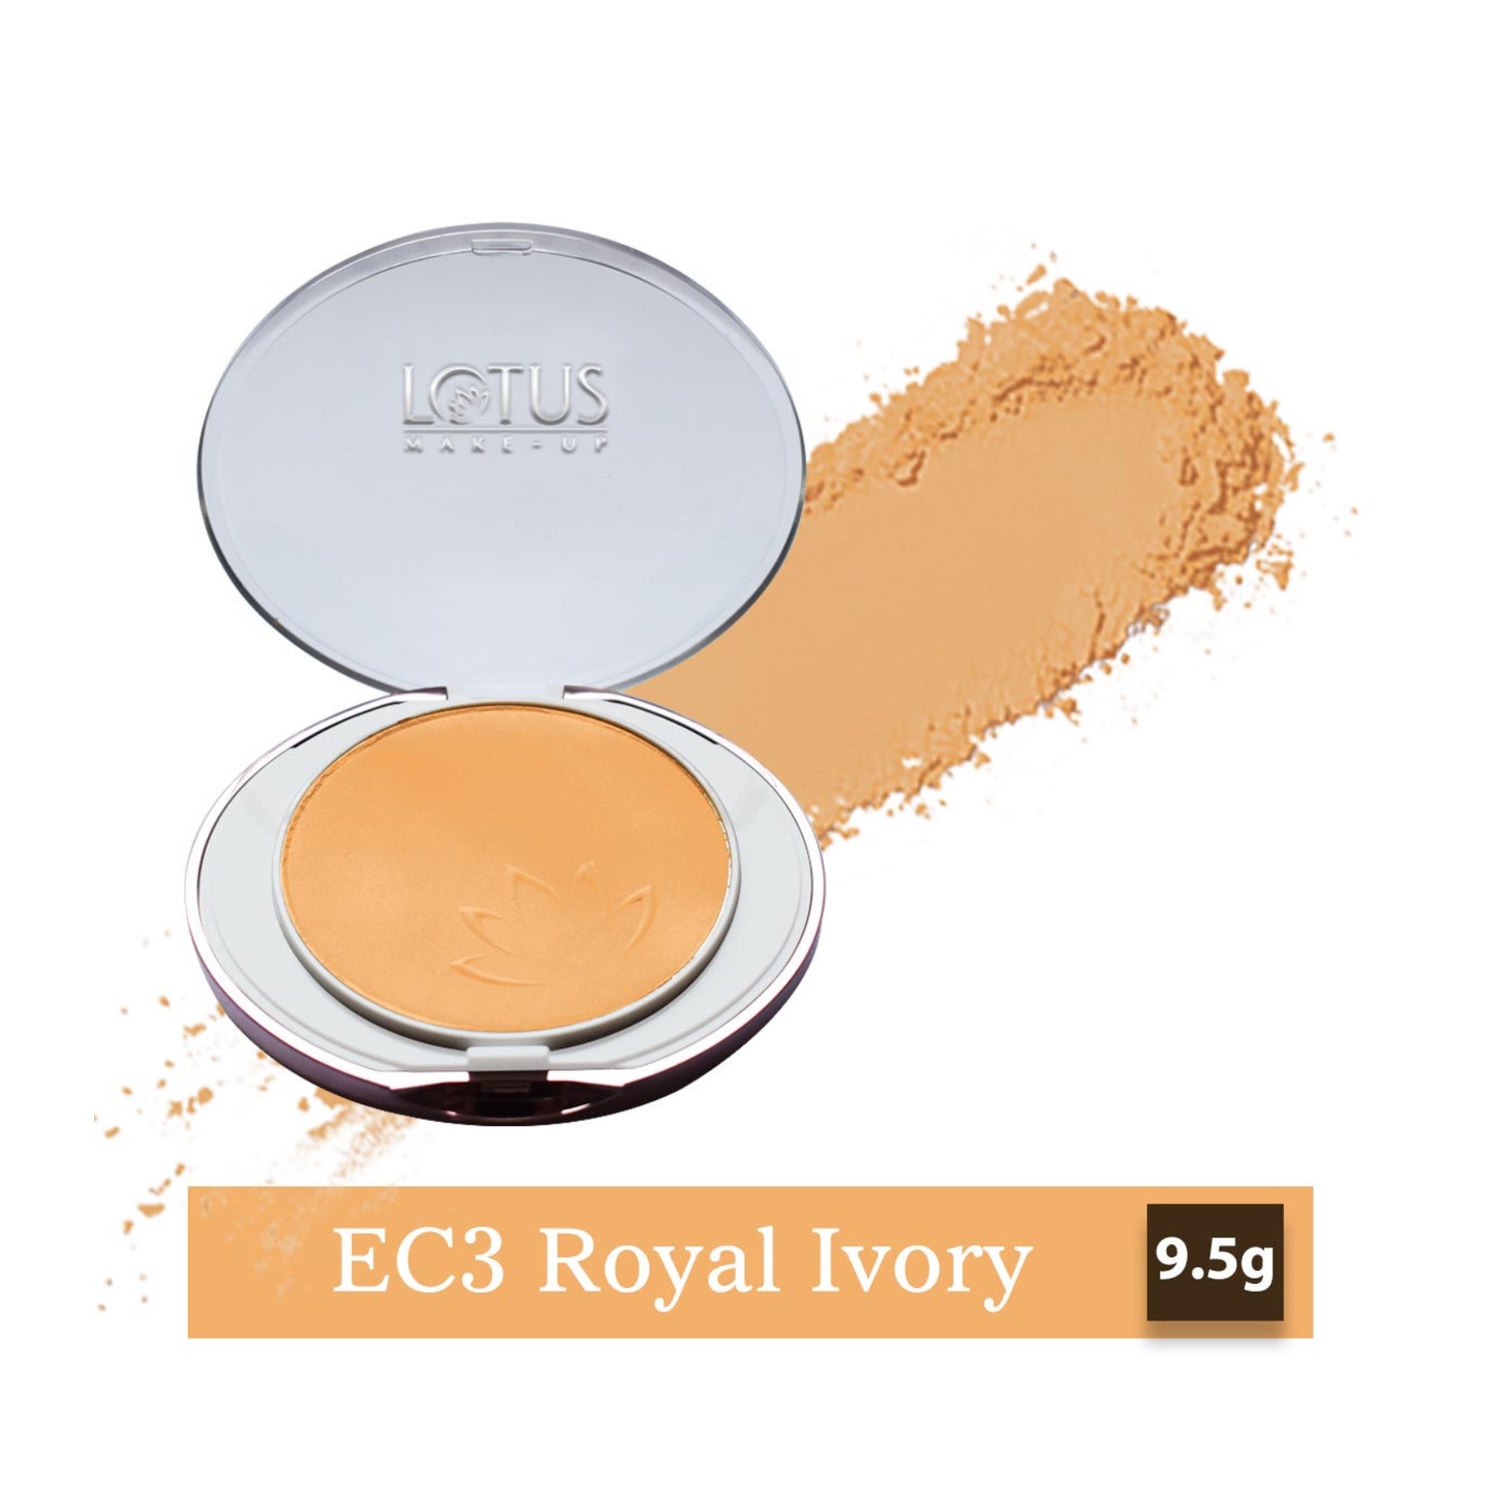 Lotus | Lotus Makeup Ecostay Ideal Finish Pressed Powder SPF 25 - EC3 Royal Ivory (9.5g)